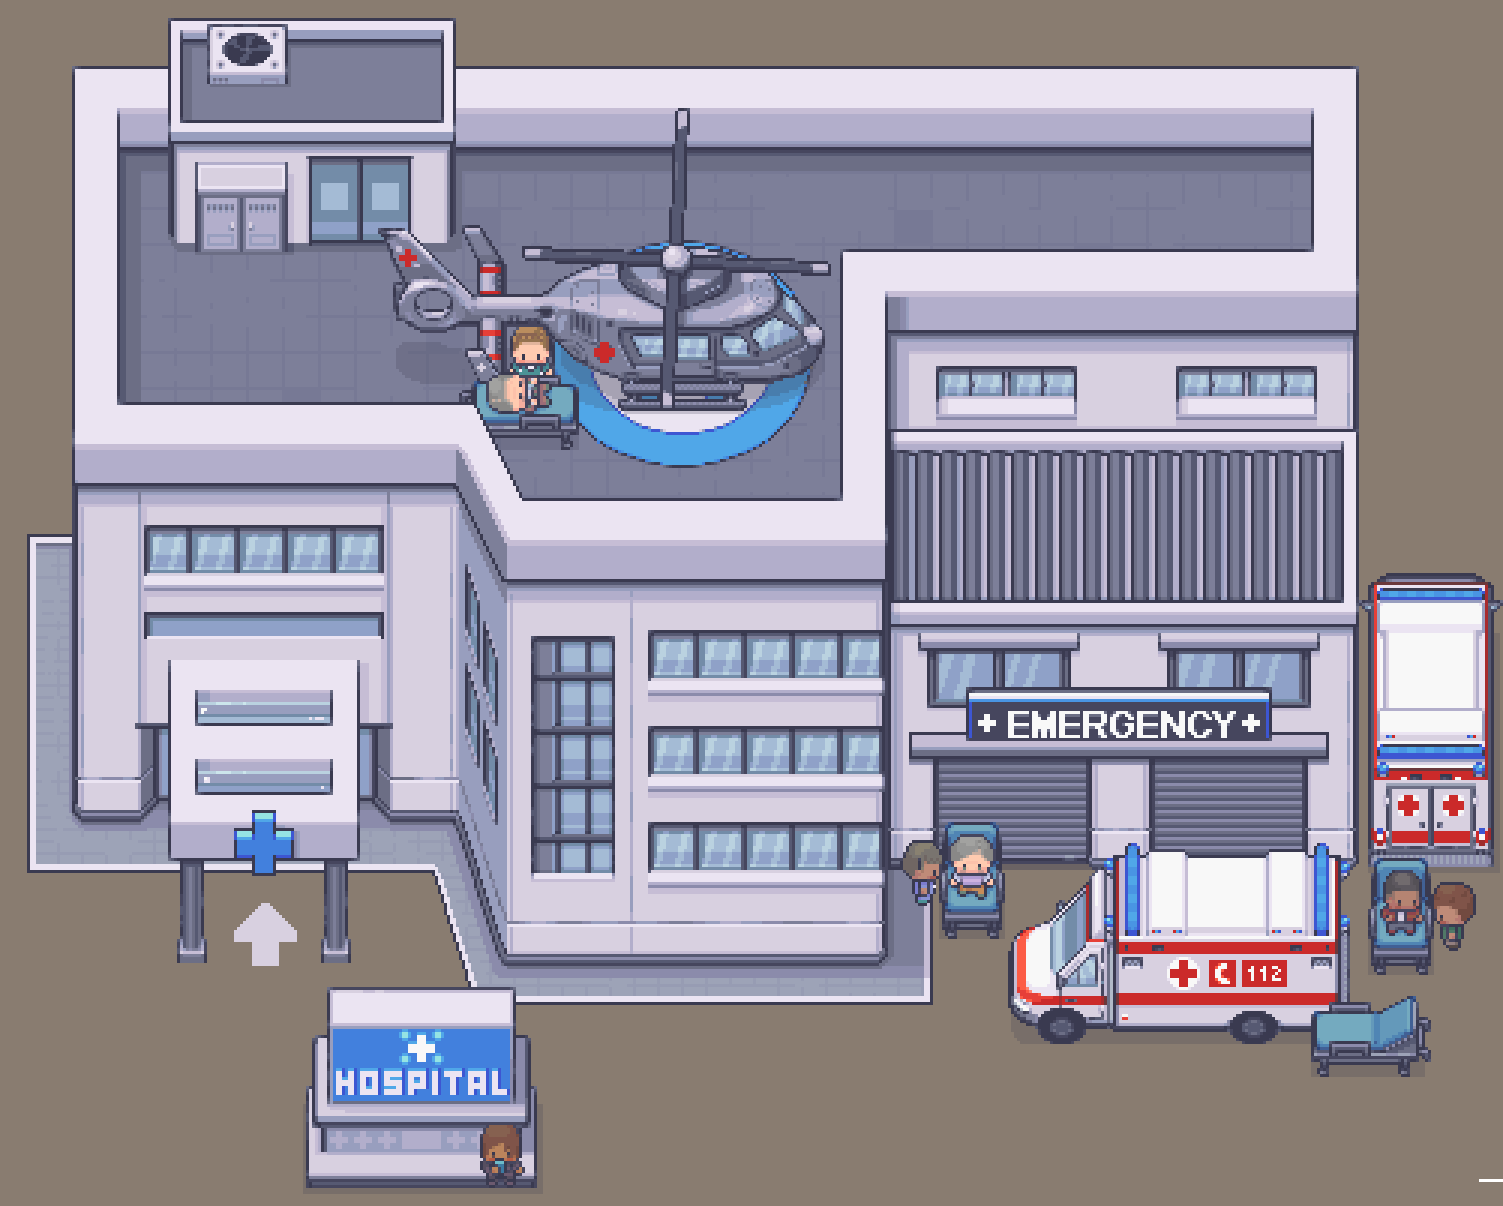 ArtStation - Hospital - 16x16